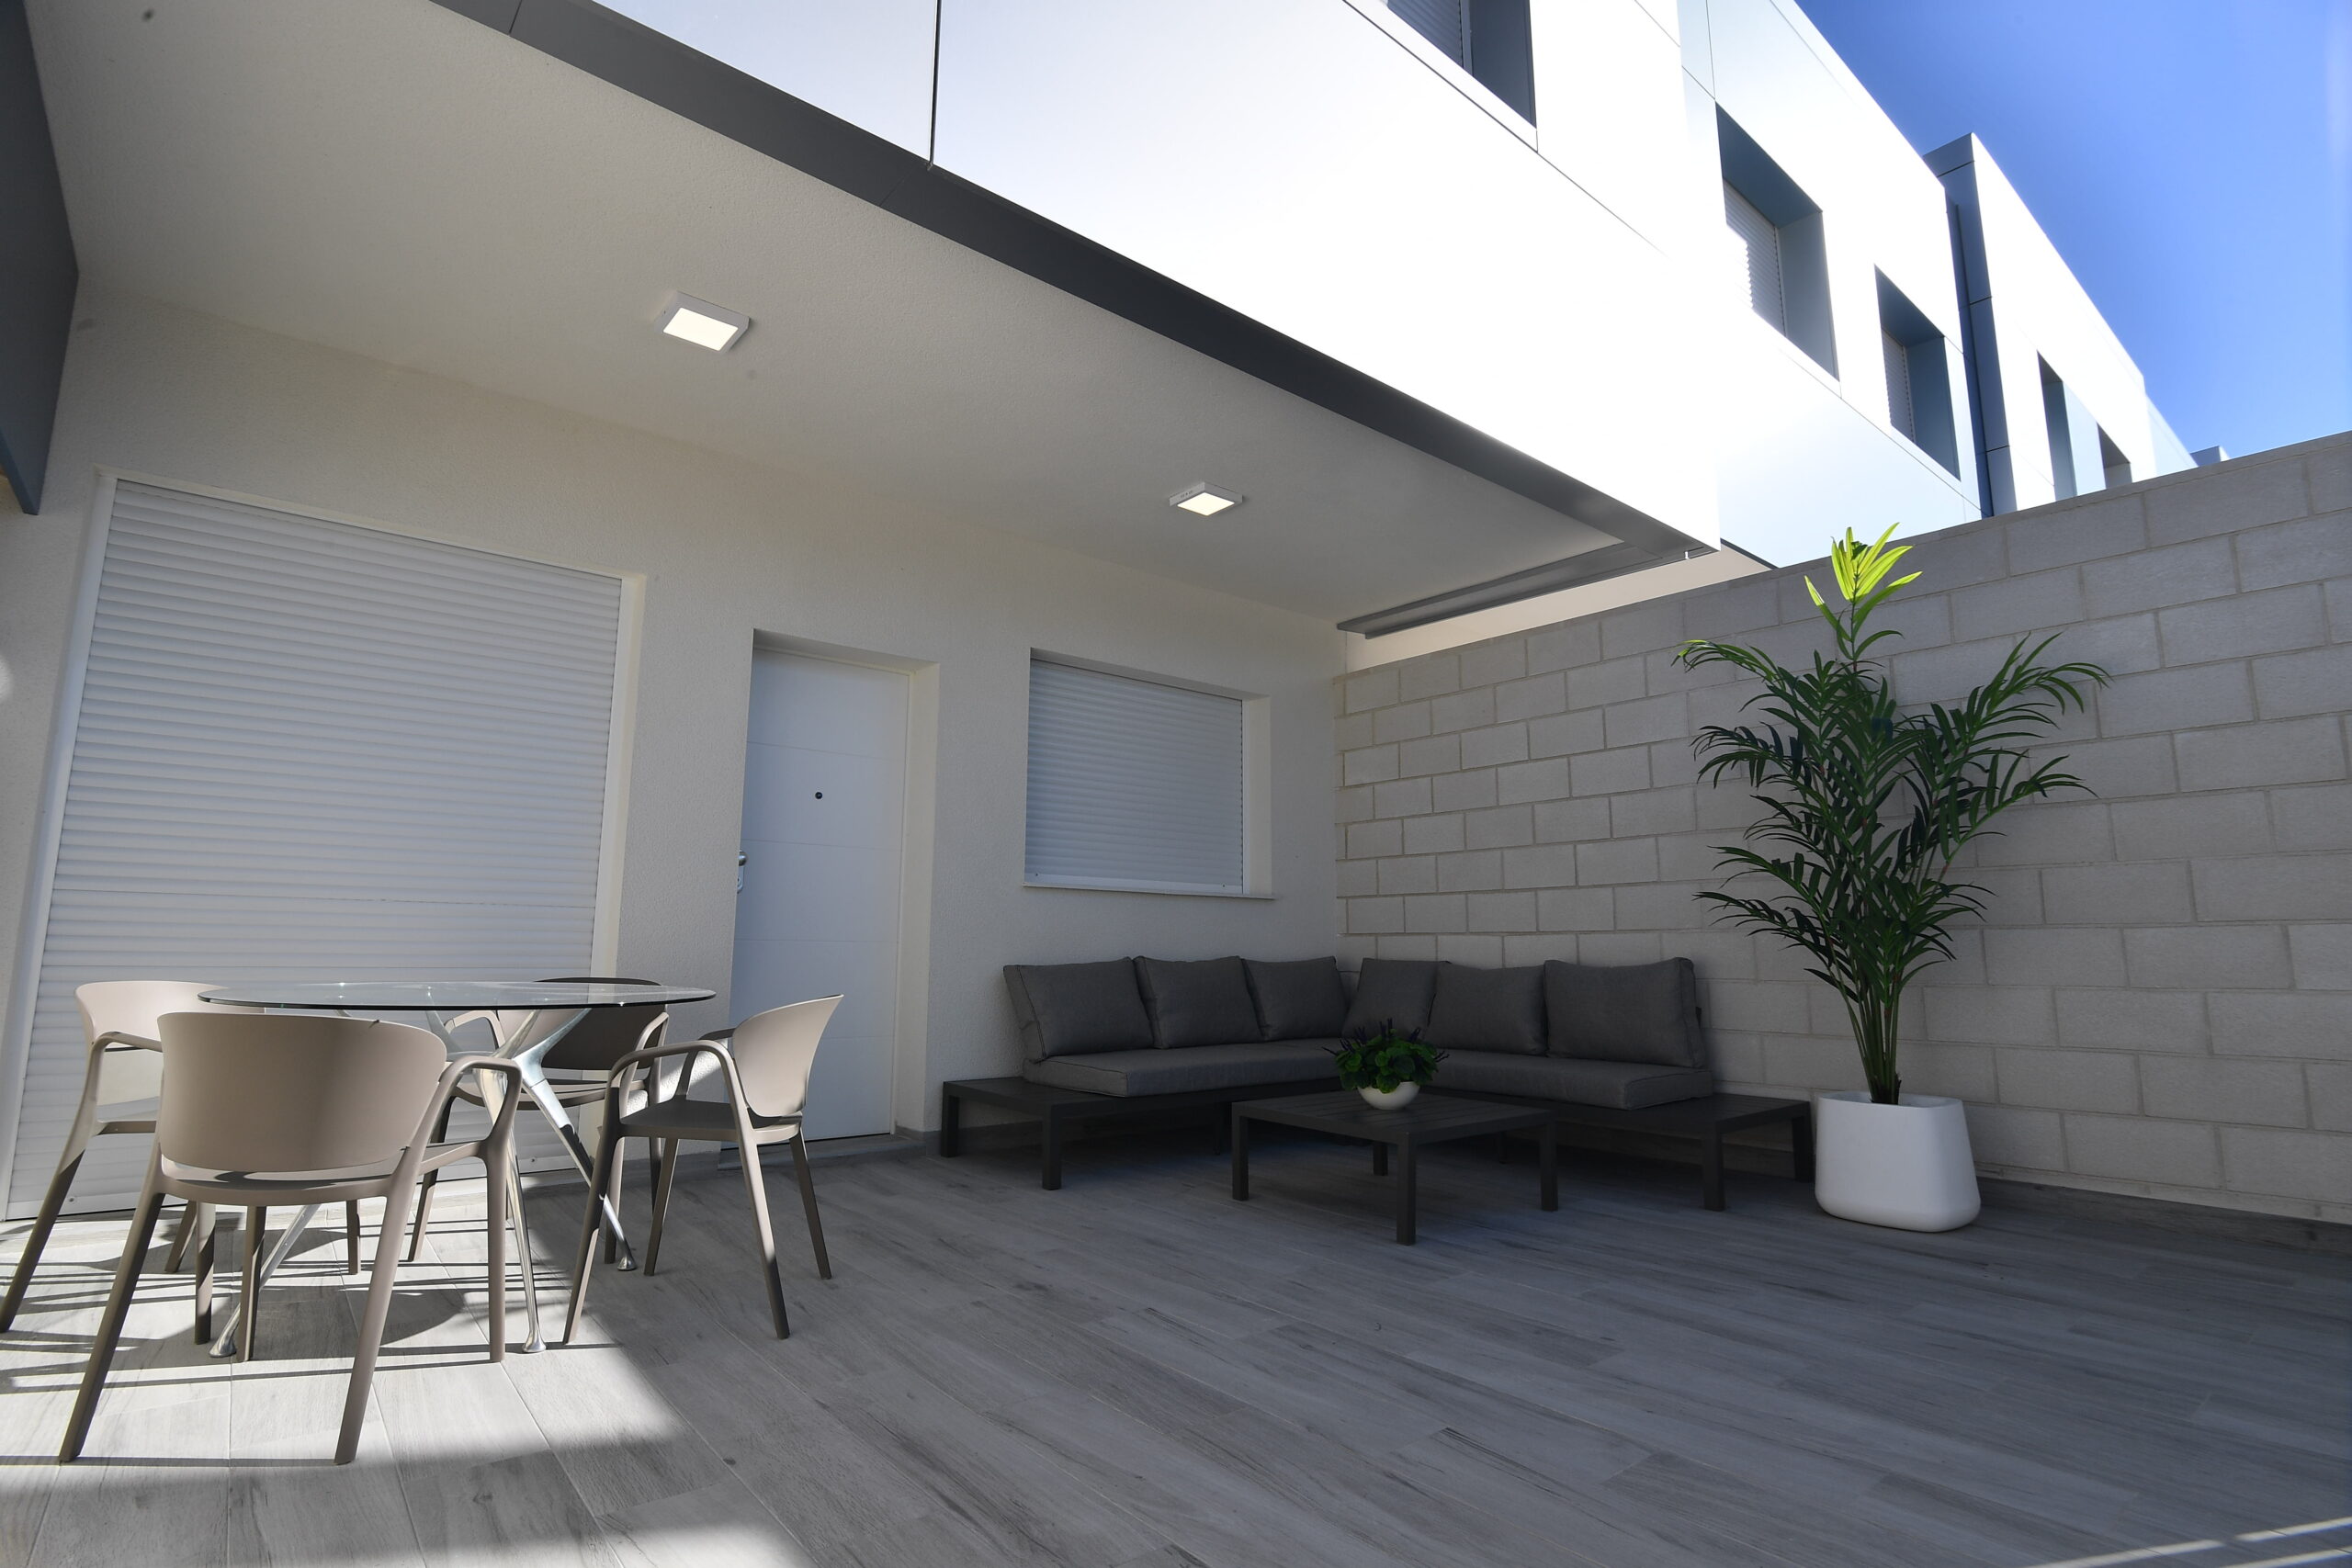 Obra nueva en Aspe, promoción Residencial Wagner con terraza exterior moderna. Terrazas en casas modernas: una conexión con el exterior.